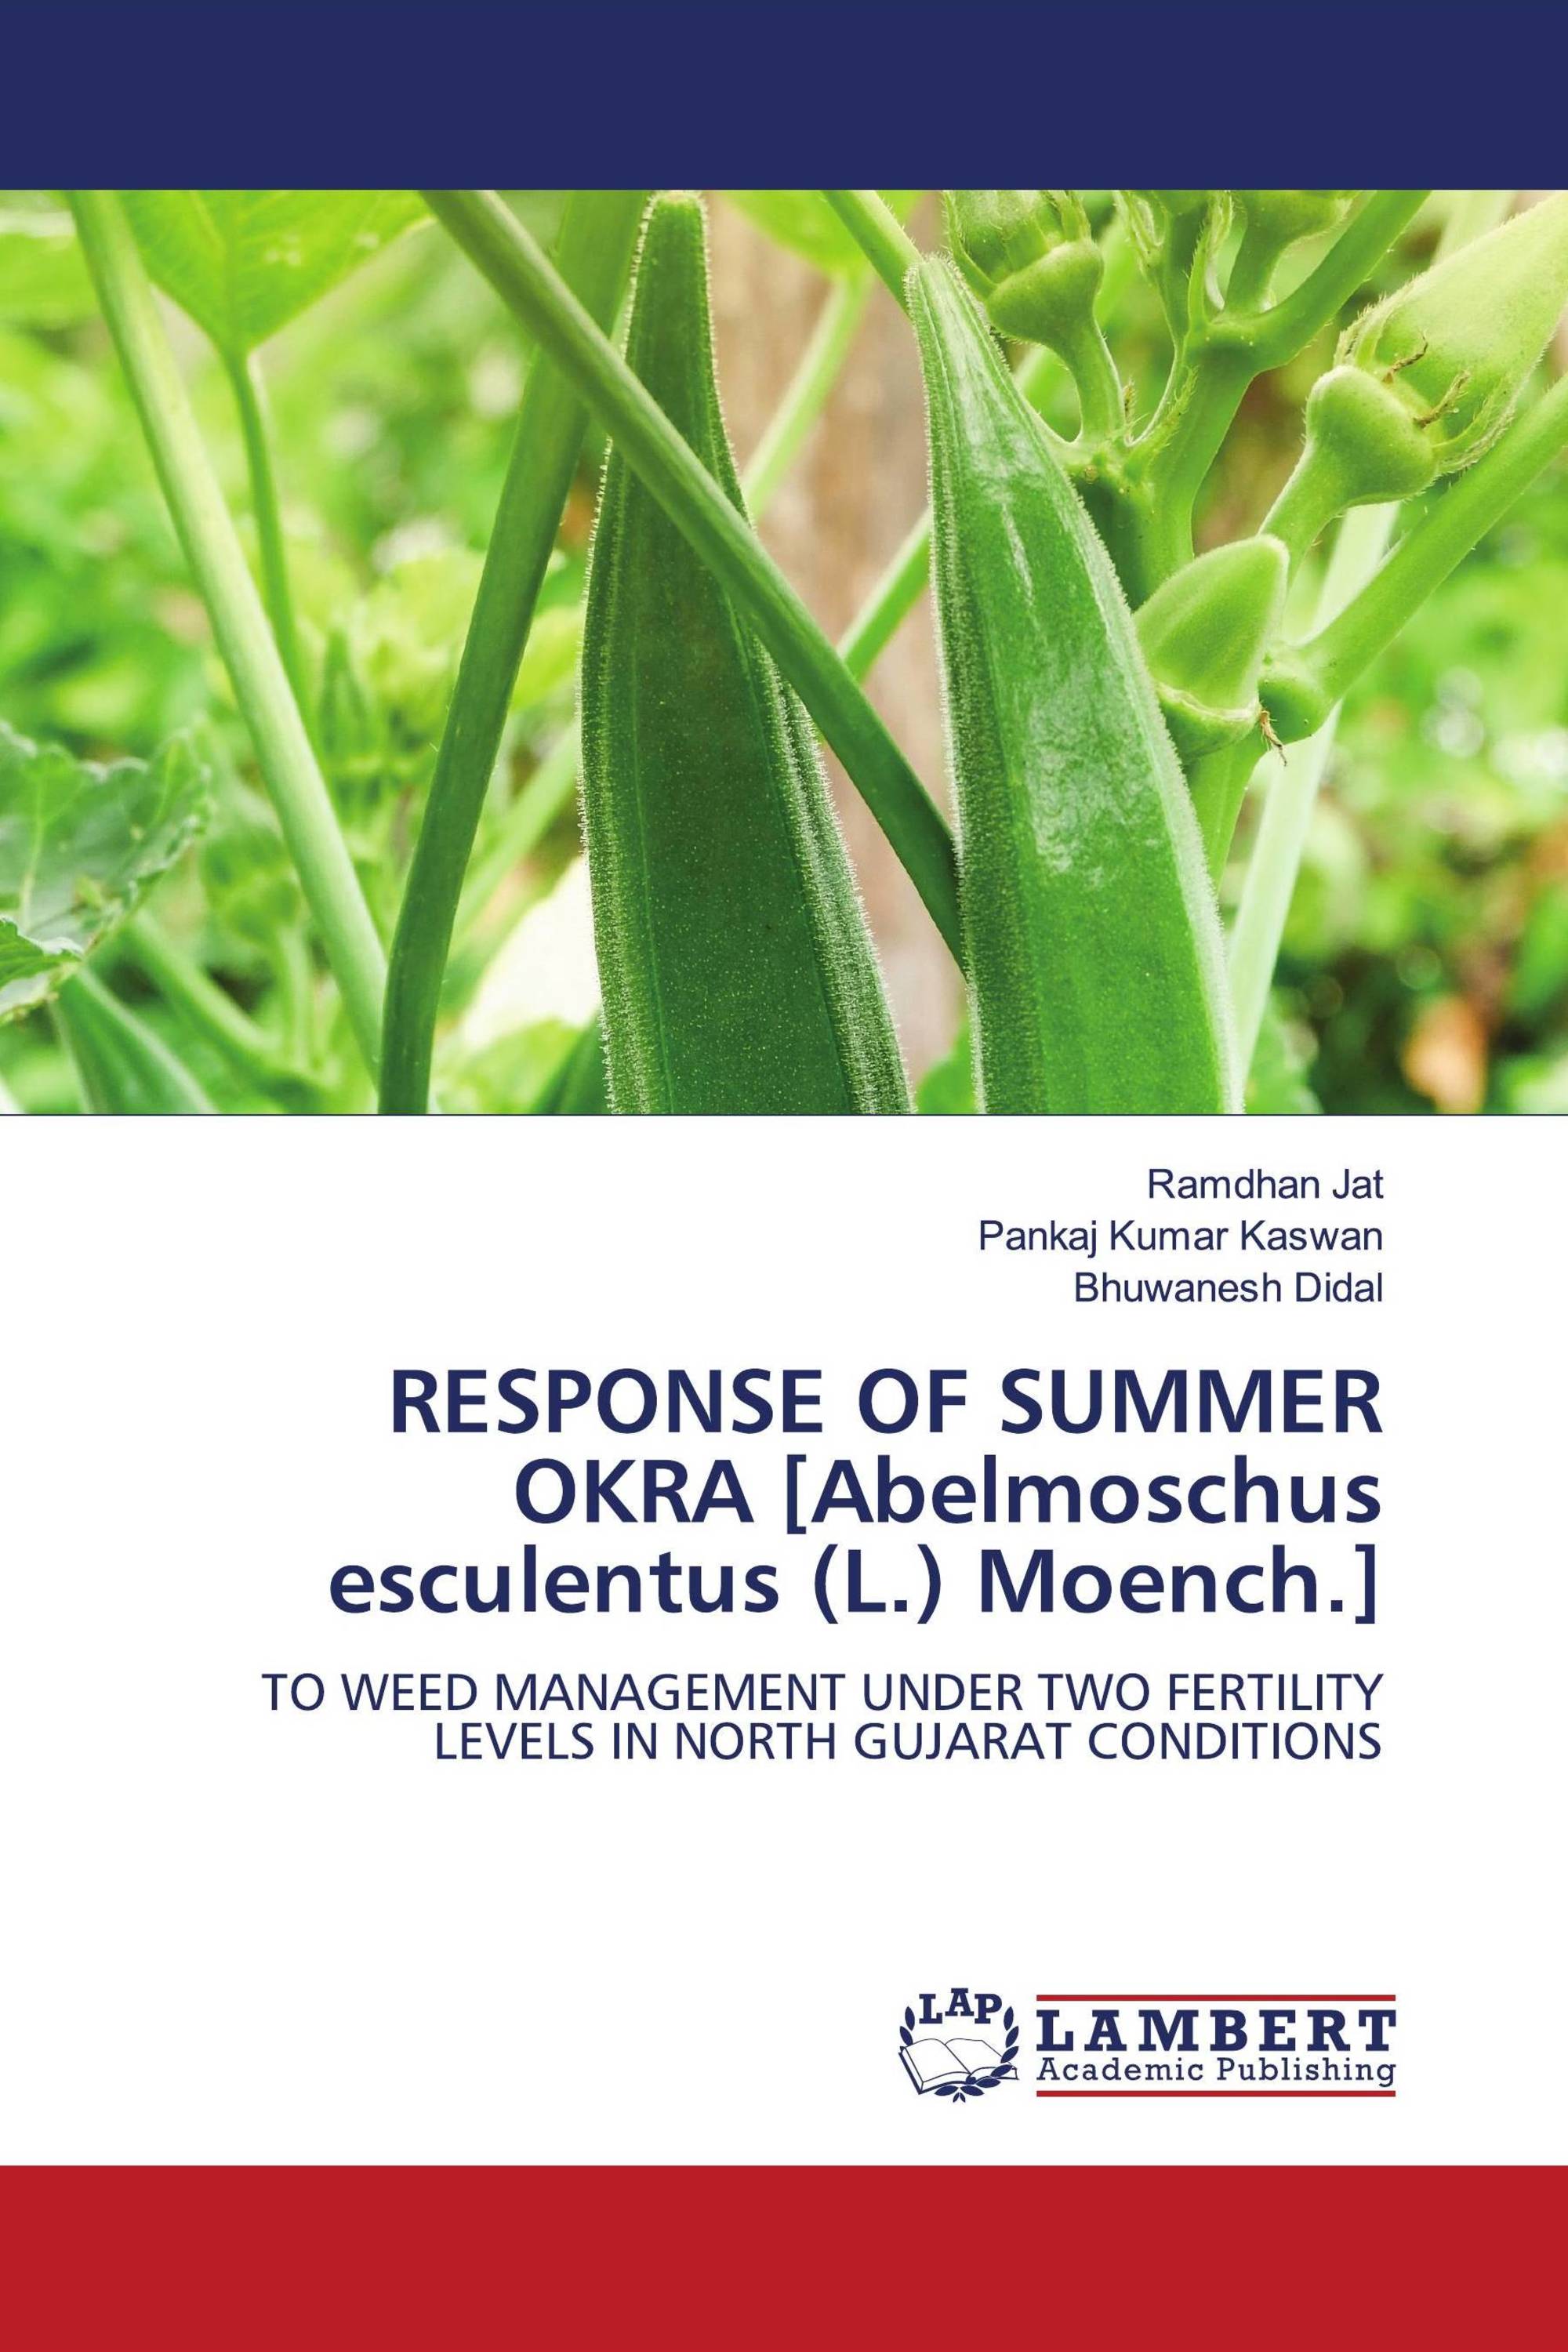 RESPONSE OF SUMMER OKRA [Abelmoschus esculentus (L.) Moench.]